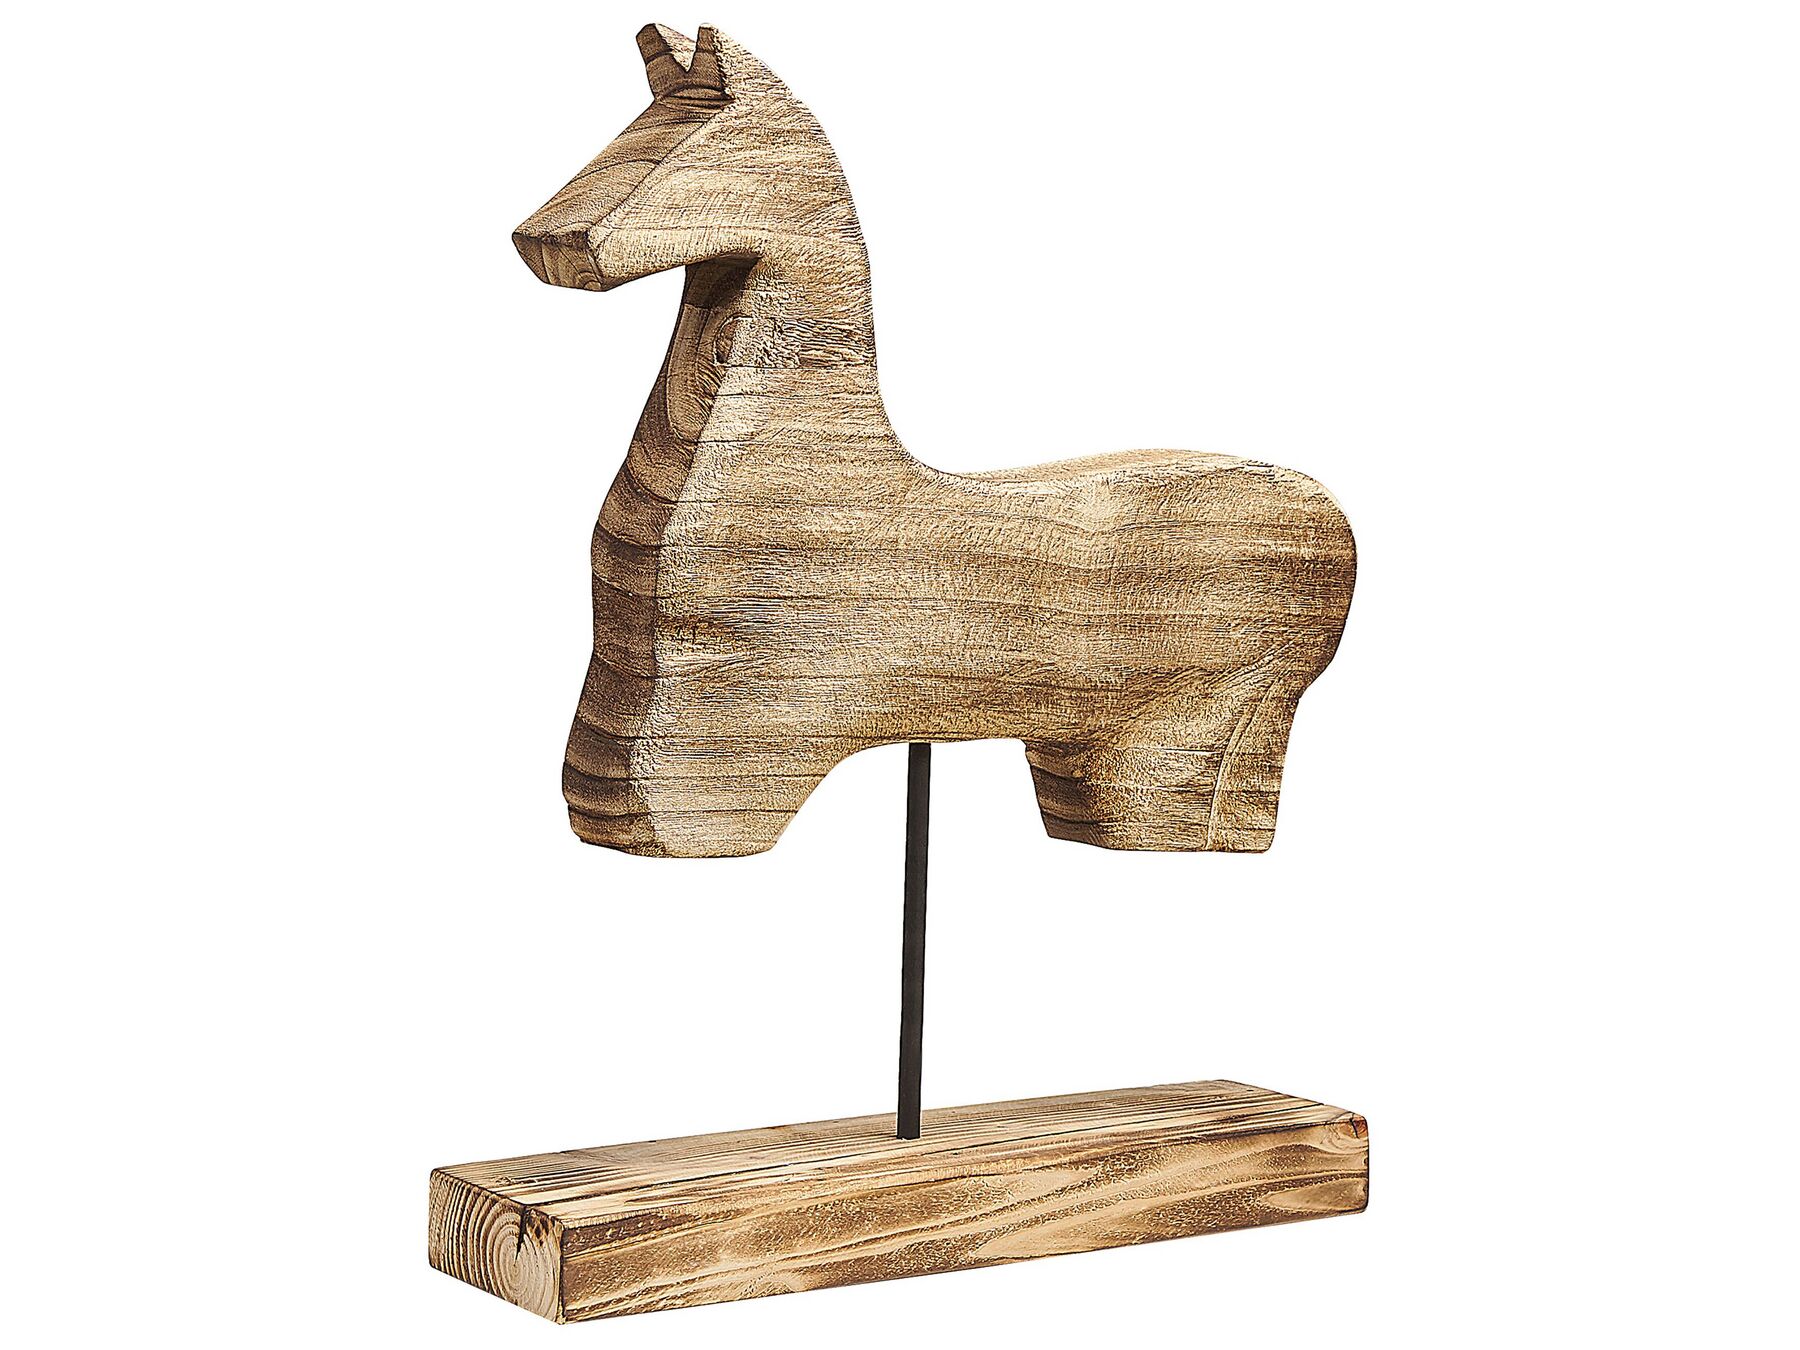 Decorative Horse Figurine Light Wood COLIMA_791686